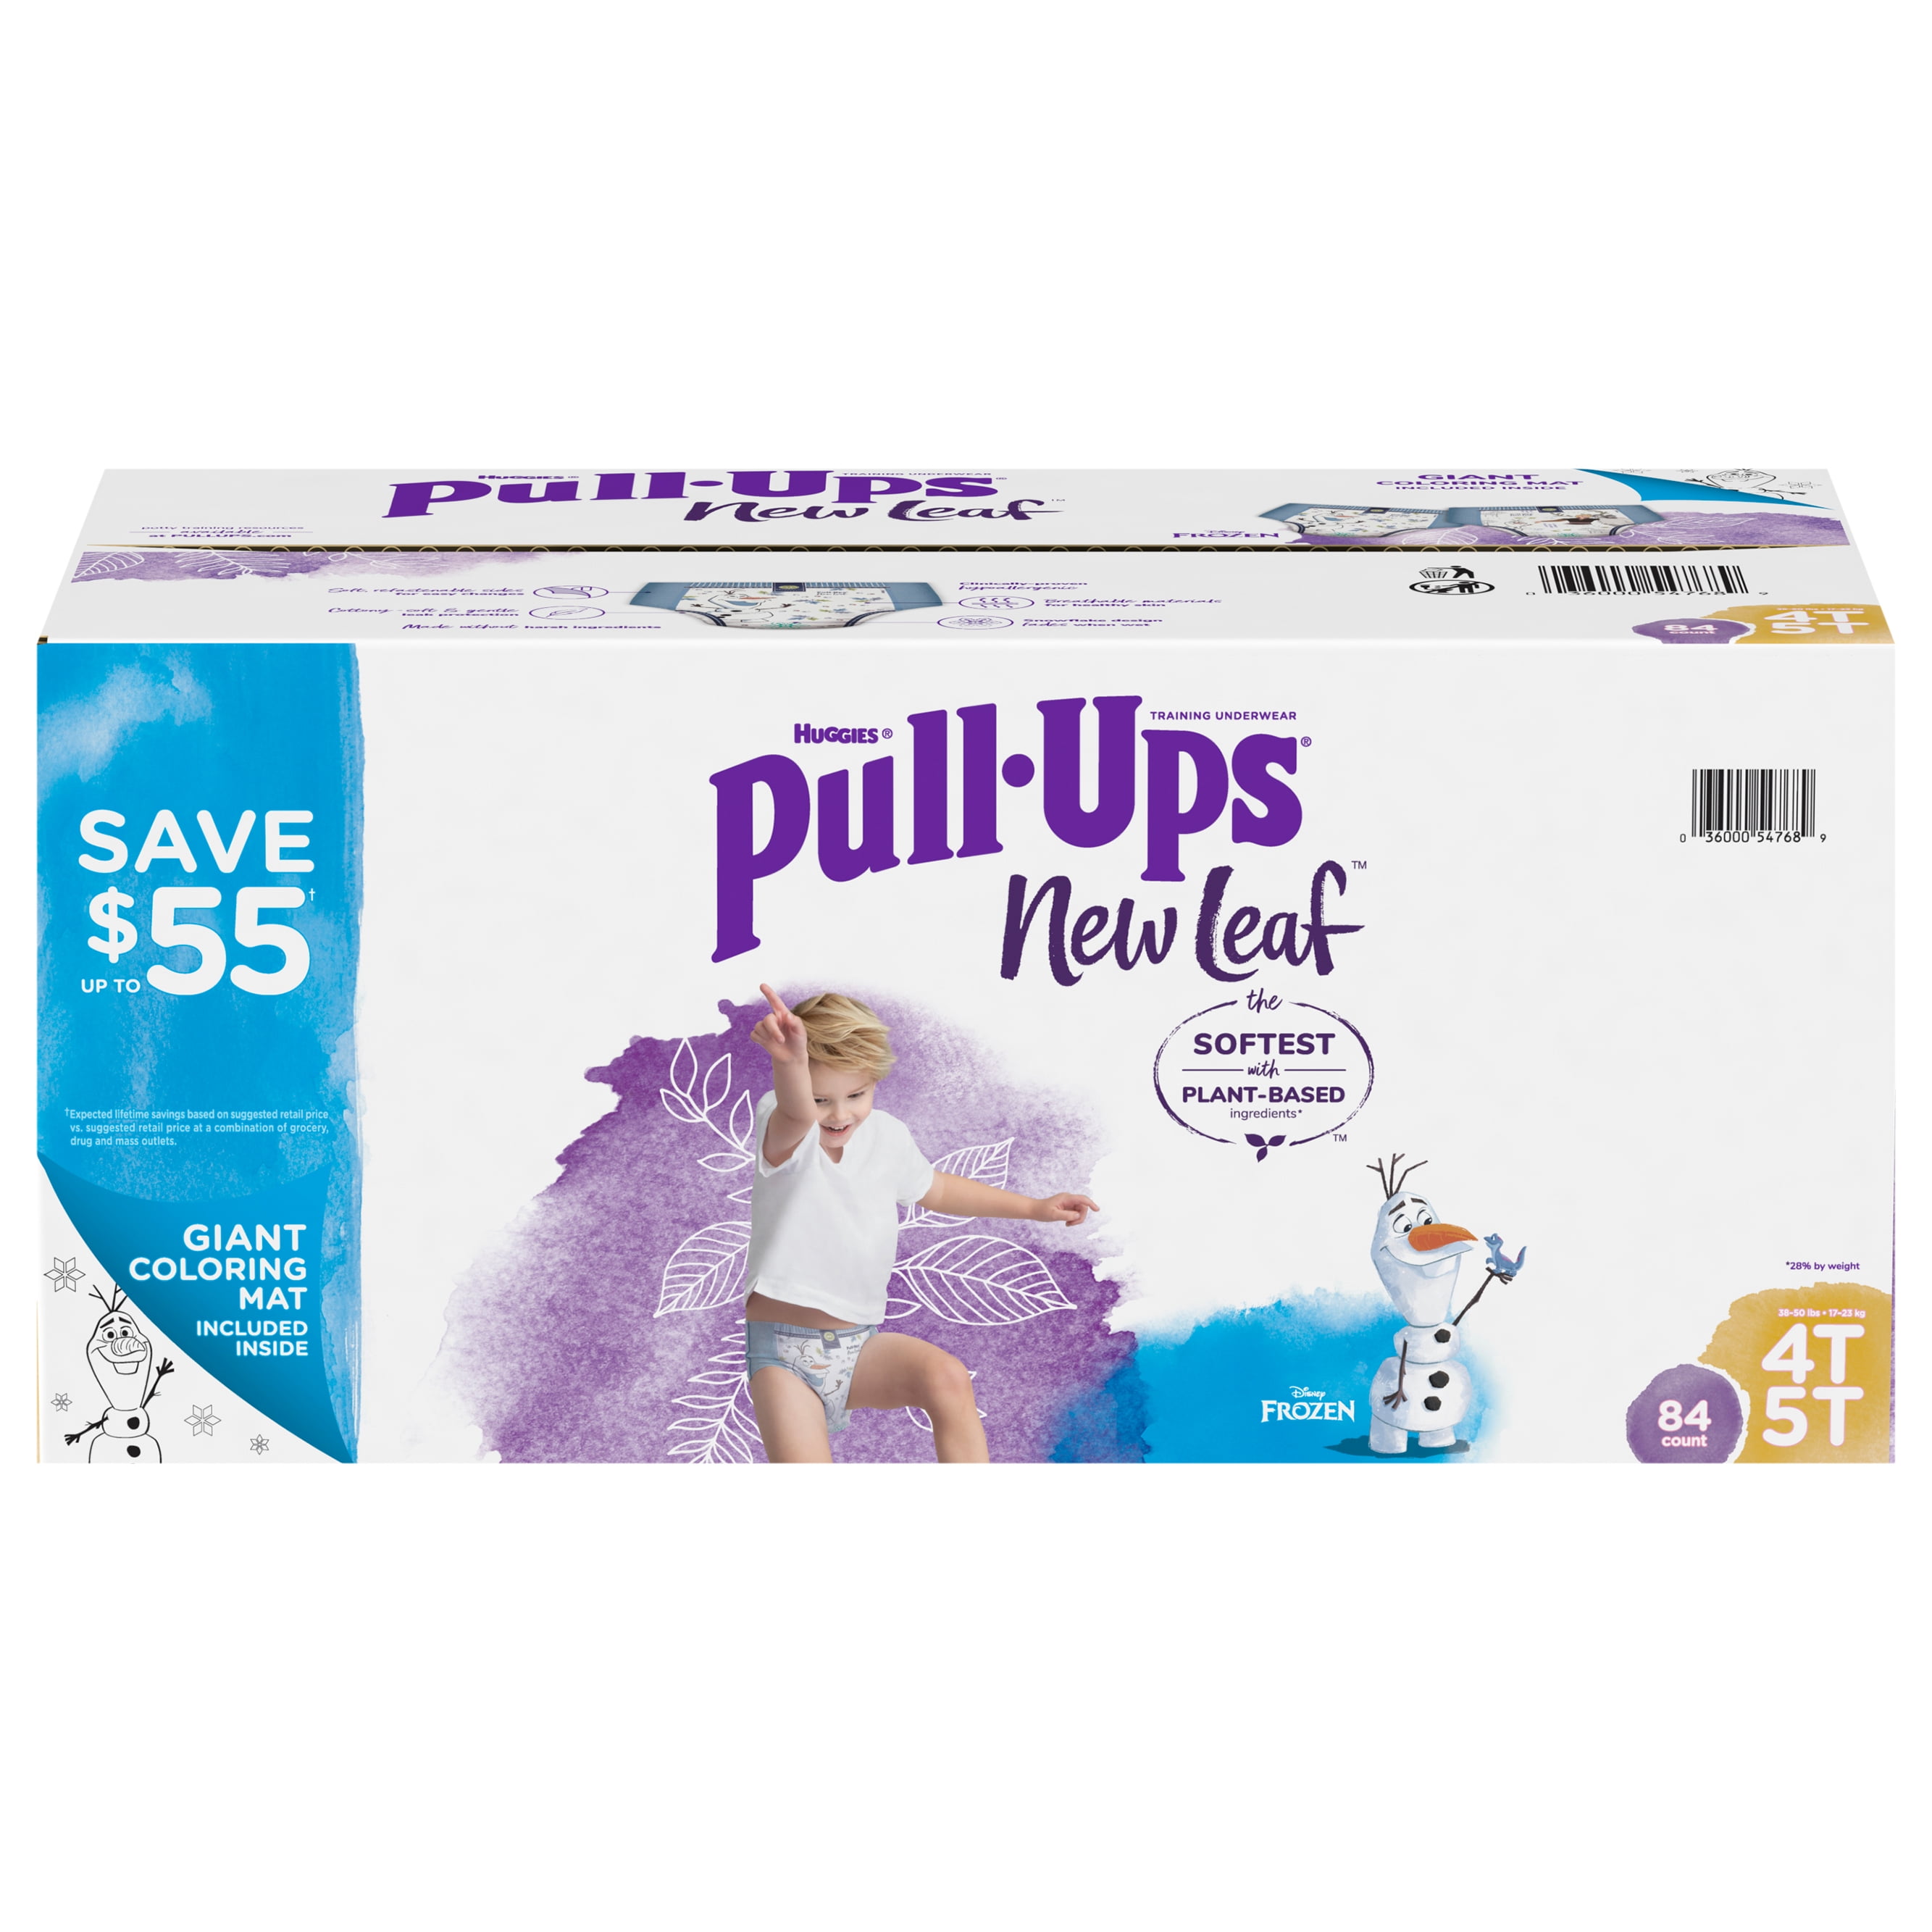  Pull-Ups New Leaf Boys' Disney Frozen Potty Training Pants,  4T-5T (38-50 lbs), 60 Ct : Baby